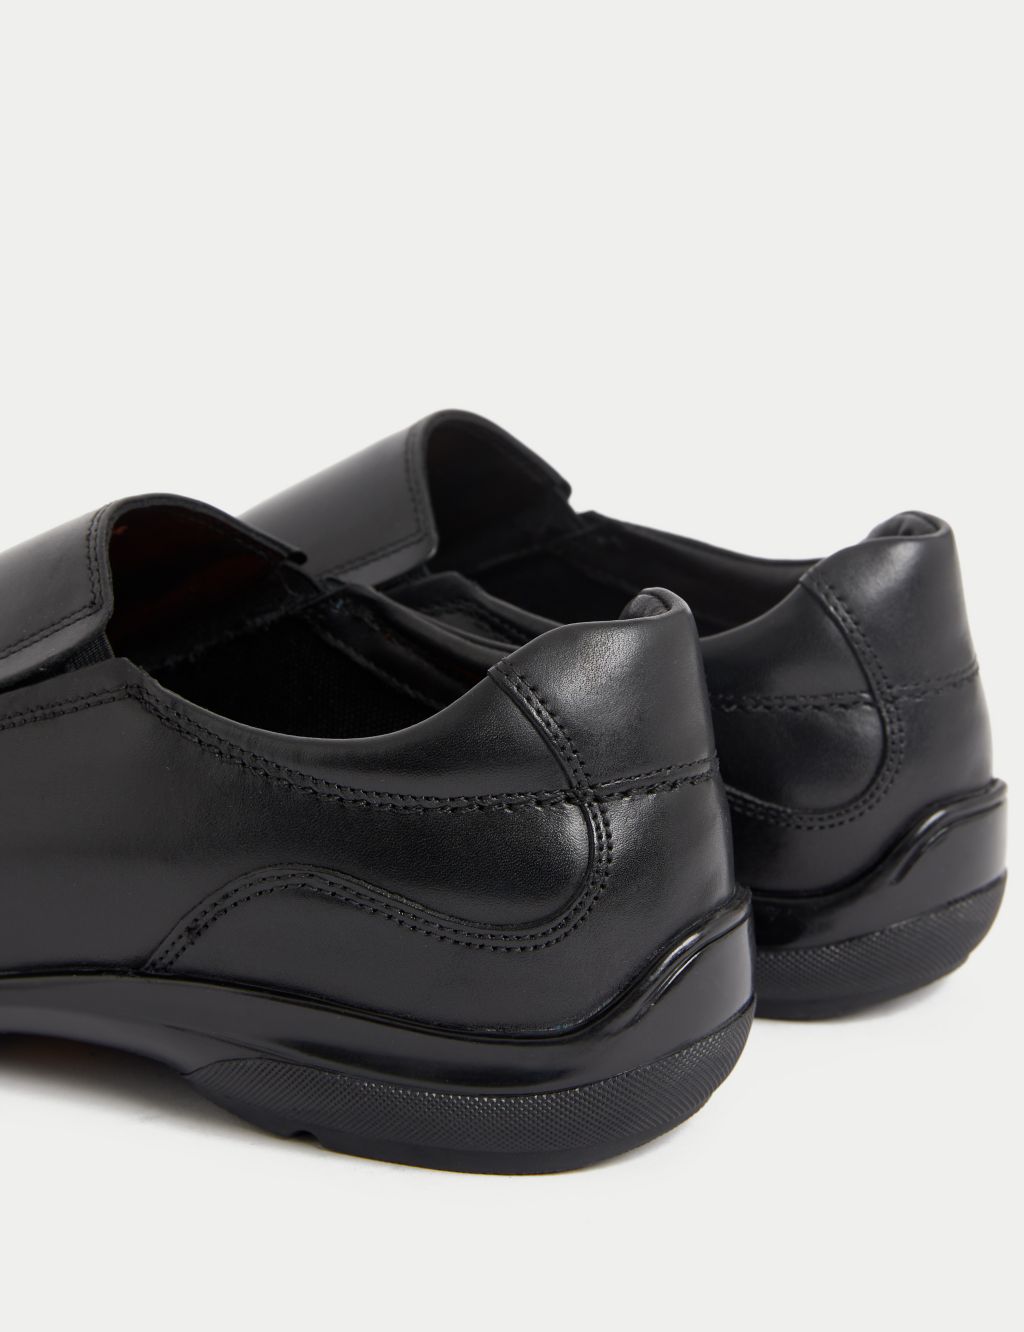 Airflex™ Leather Slip-on Shoes image 3